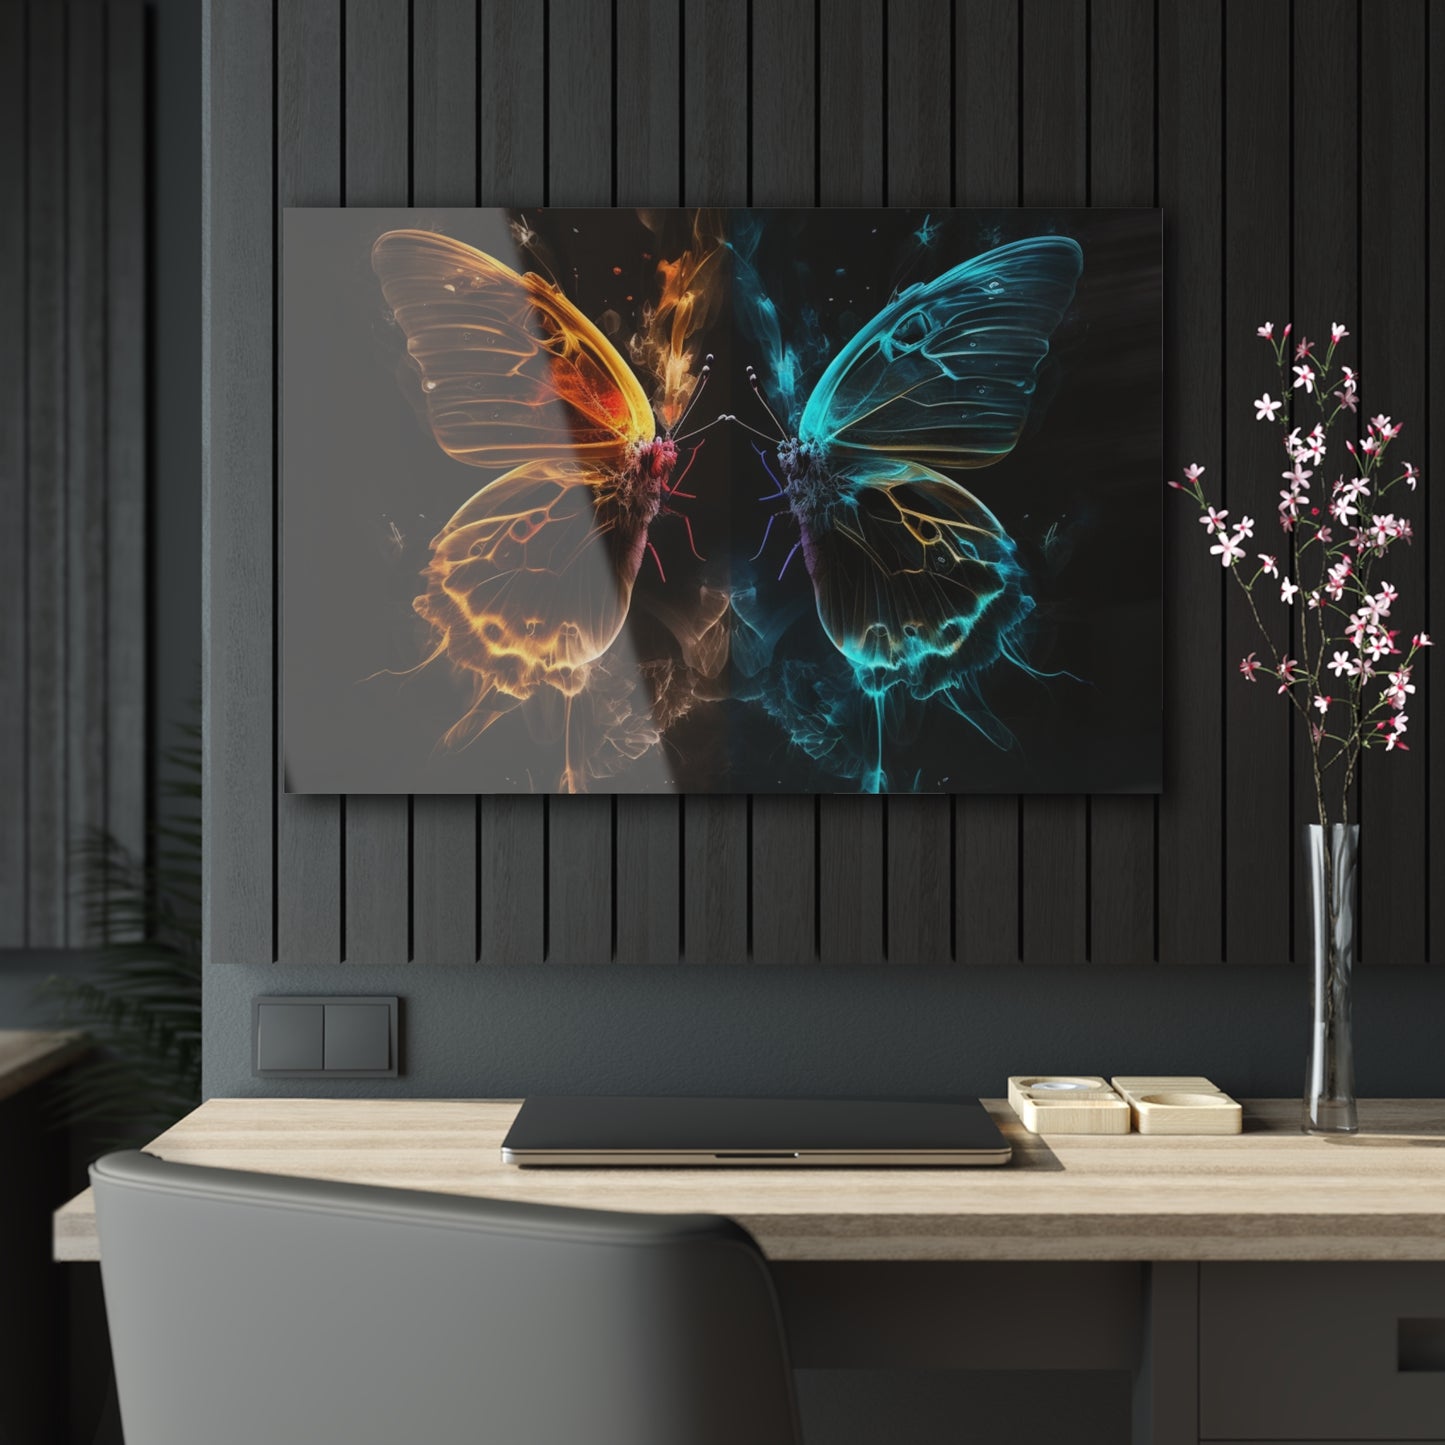 Acrylic Prints Kiss Neon Butterfly 7